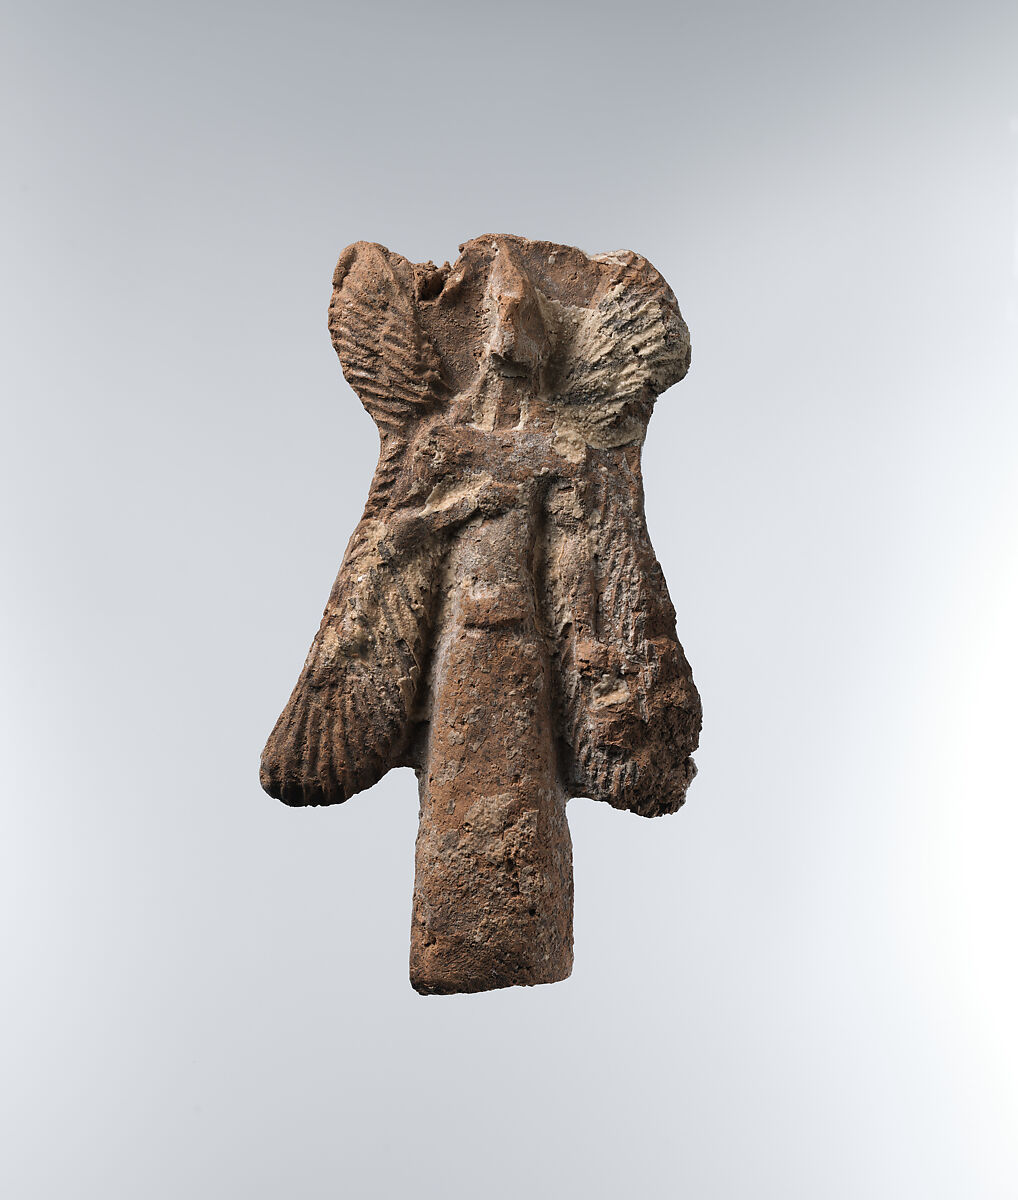 Apkallu figure: bird-headed, winged figure carrying a bucket, Ceramic, Assyrian 